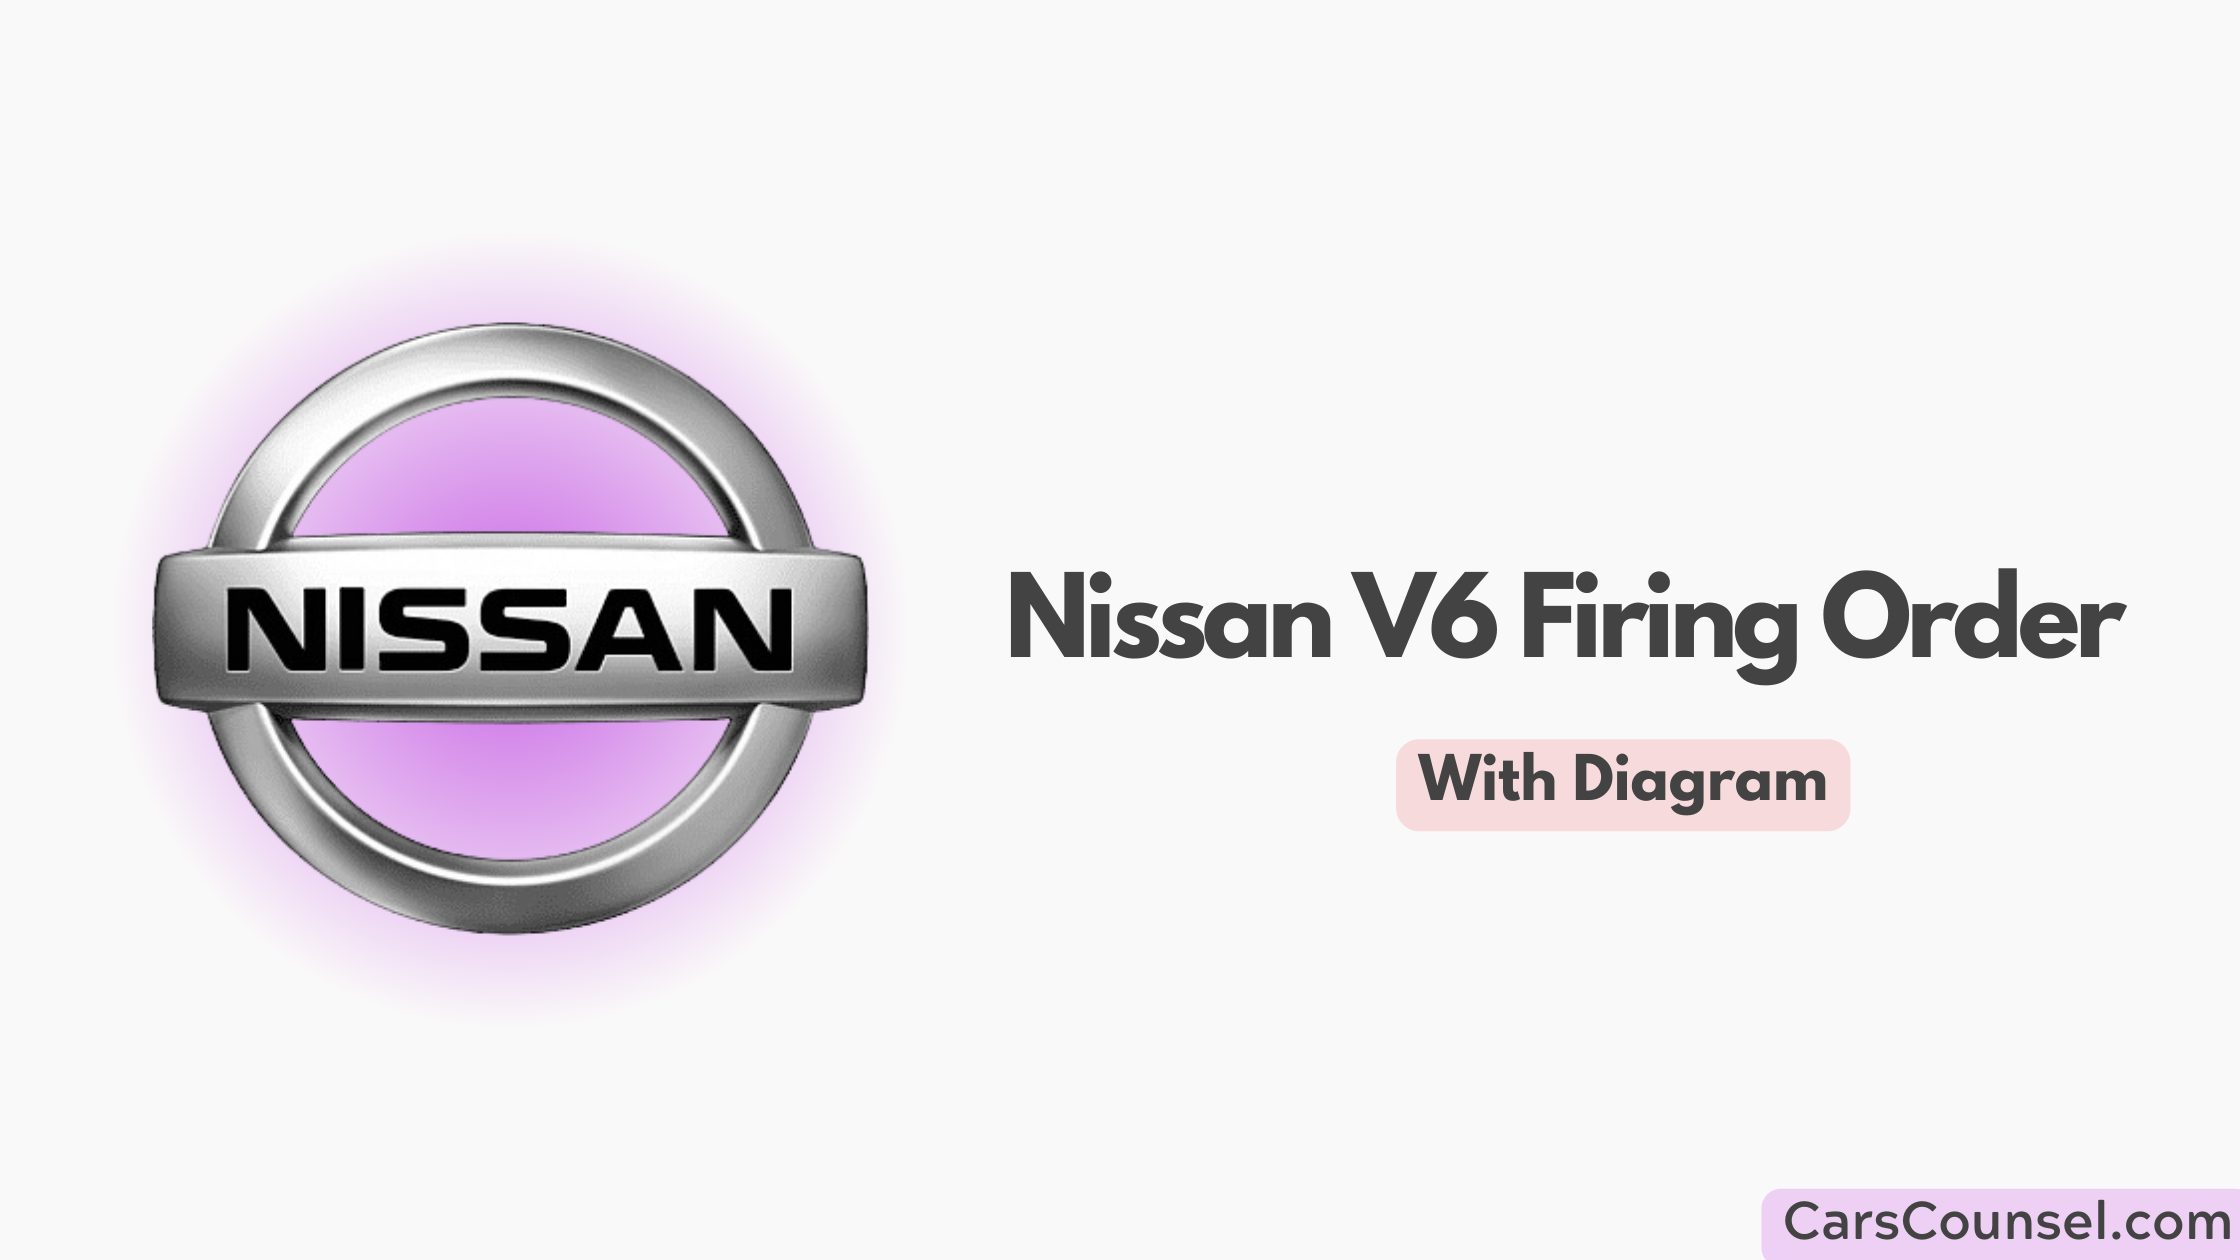 Nissan V6 Firing Order With Diagram